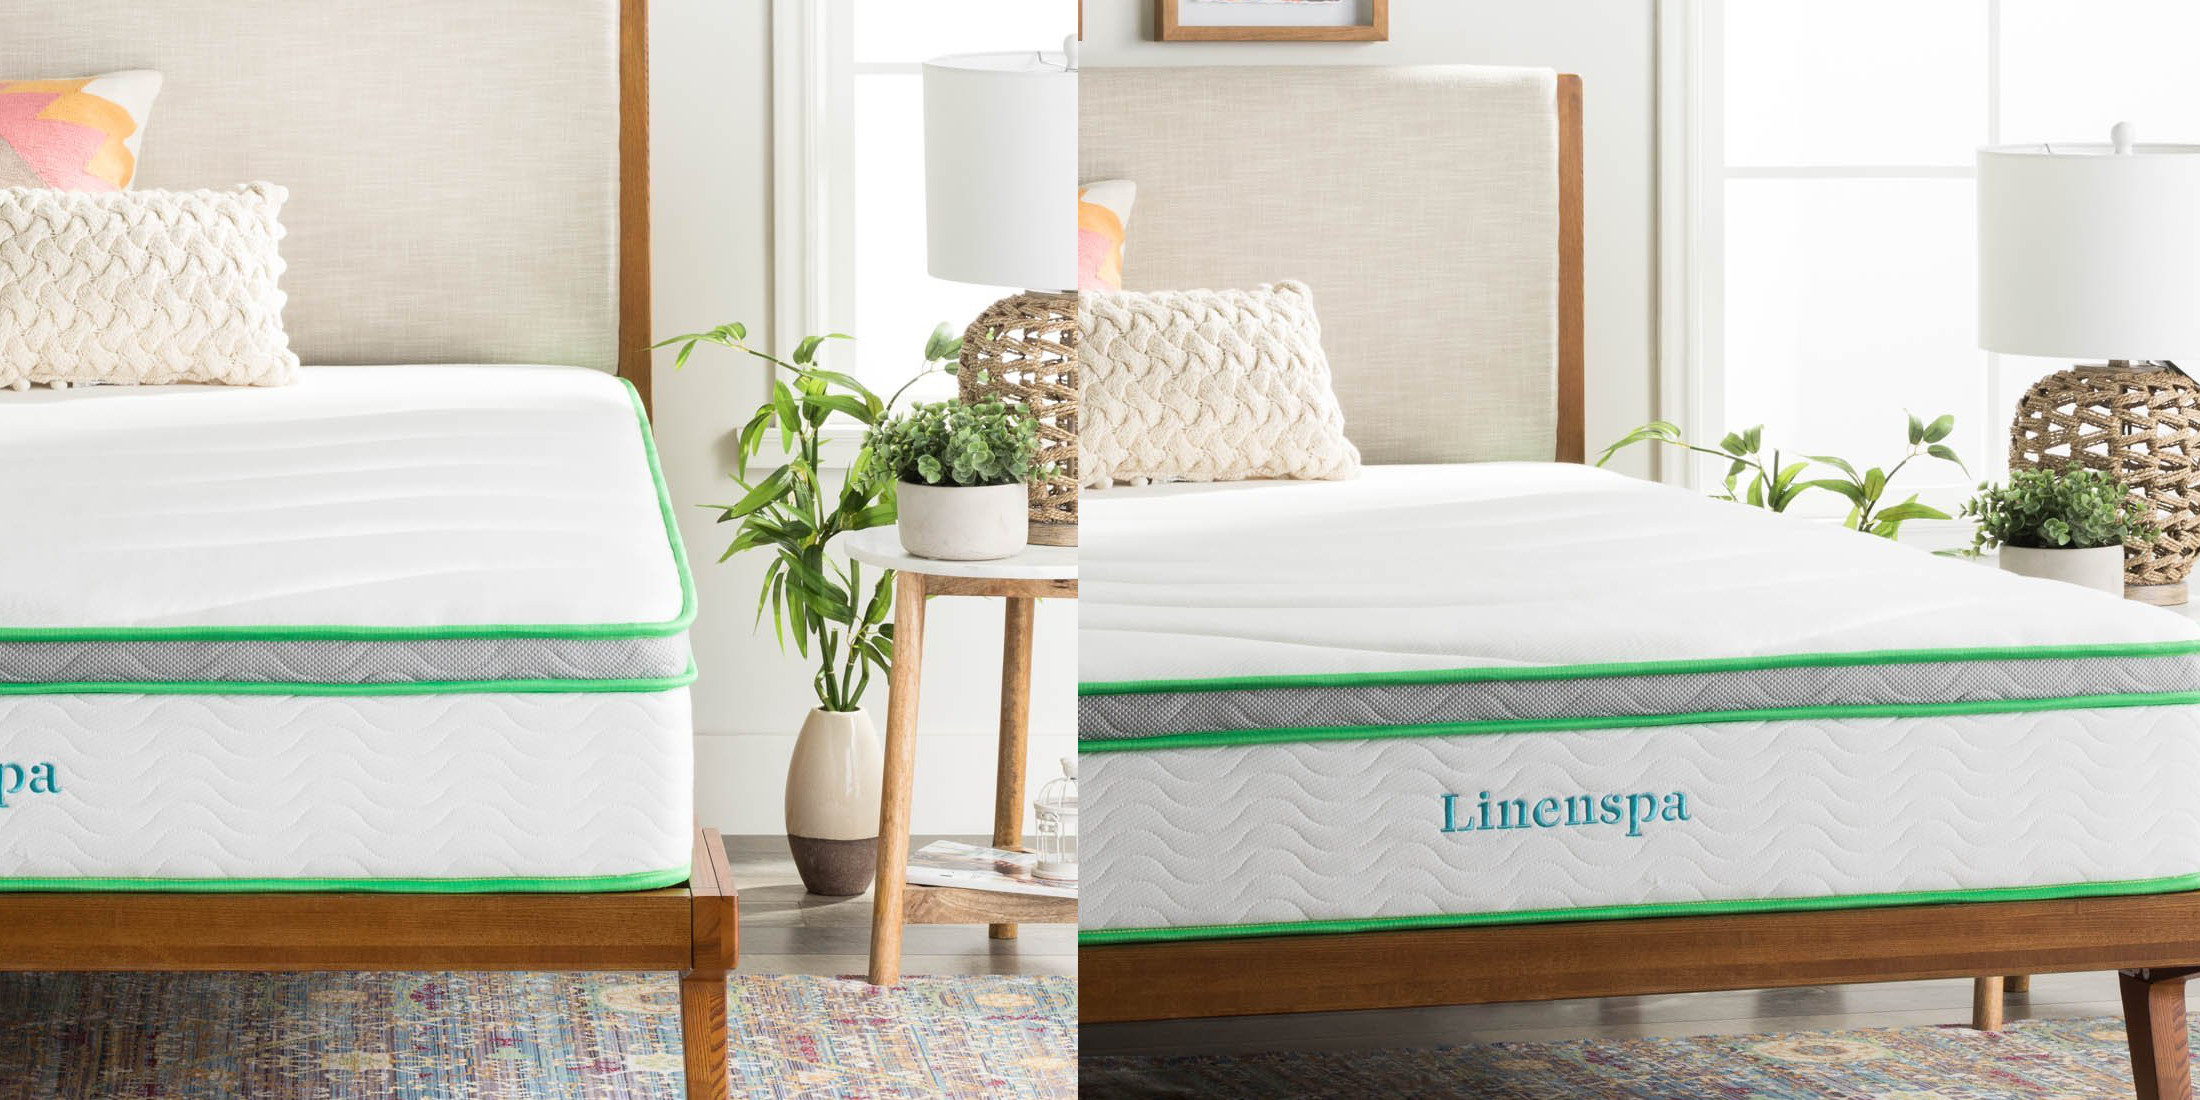 linenspa 10 inch mattress review